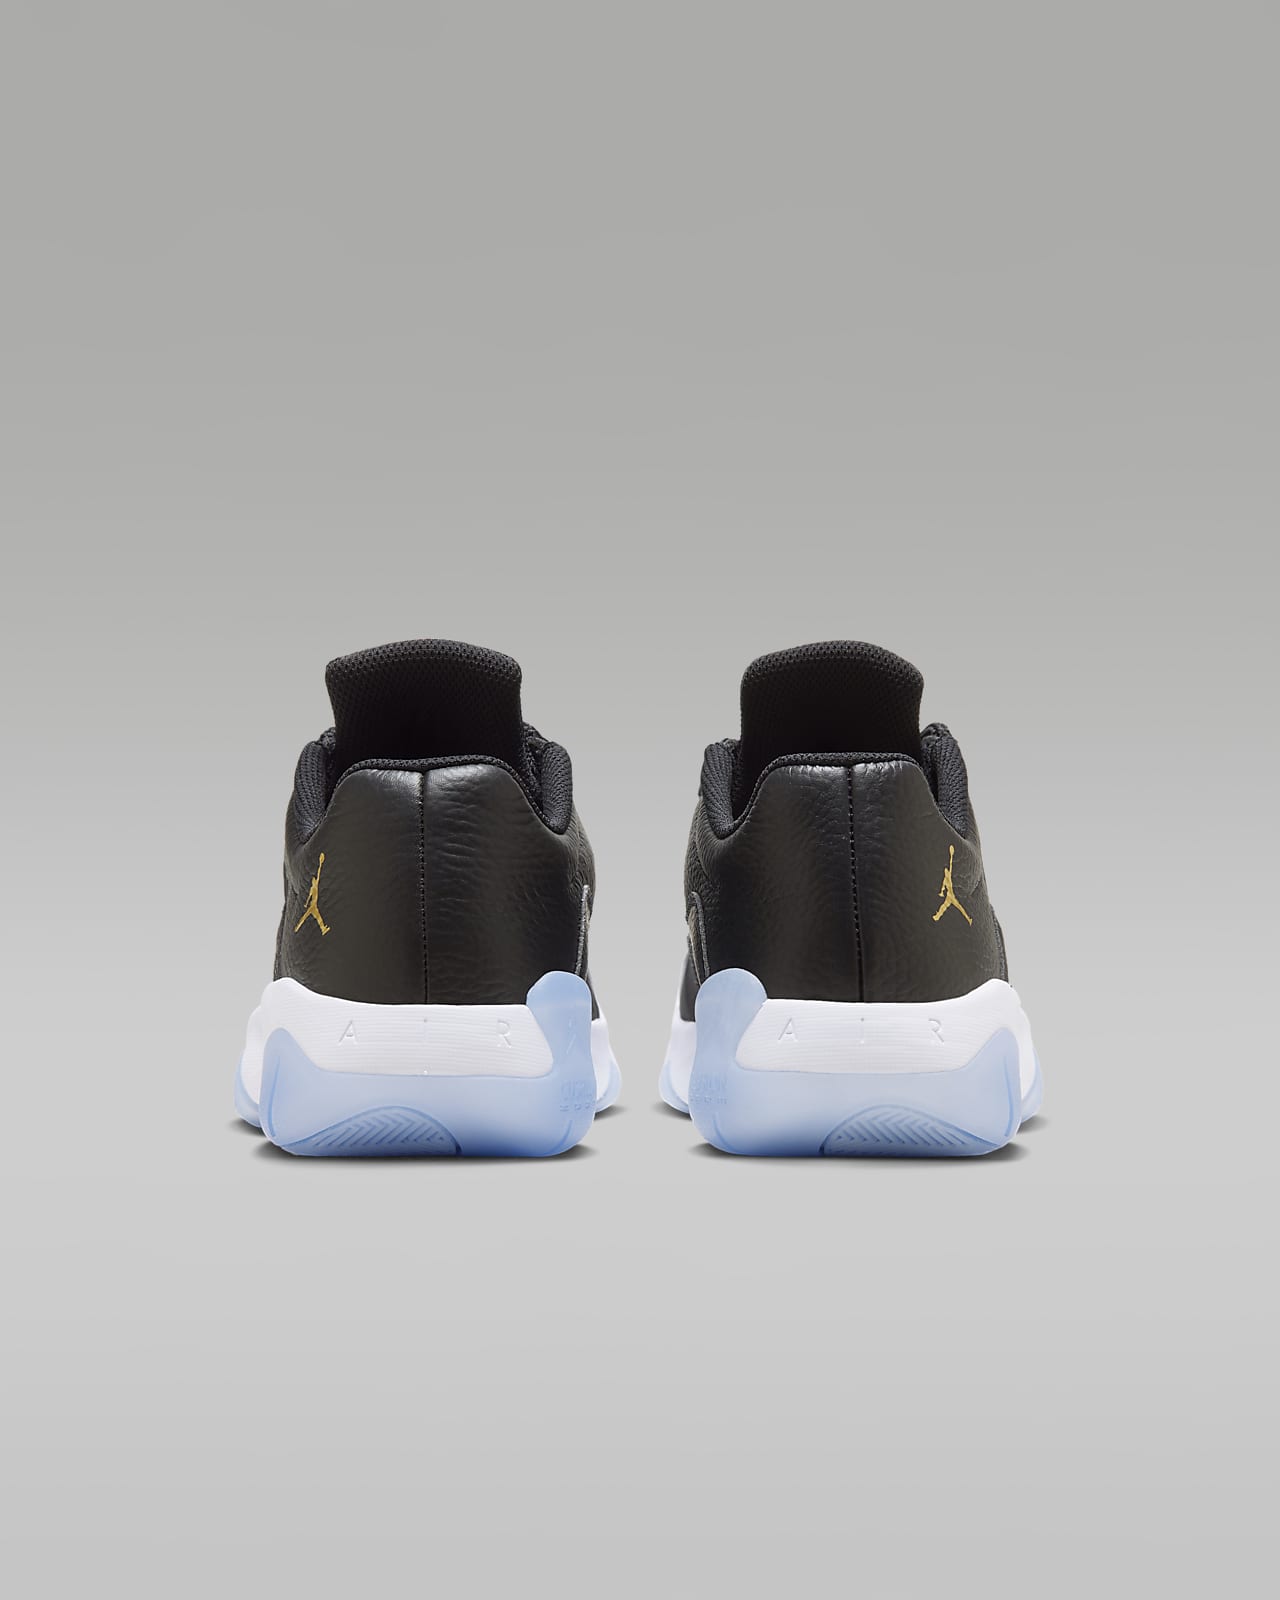 Air Jordan Black/White Fabric and Patent Leather Jordan 11 Retro